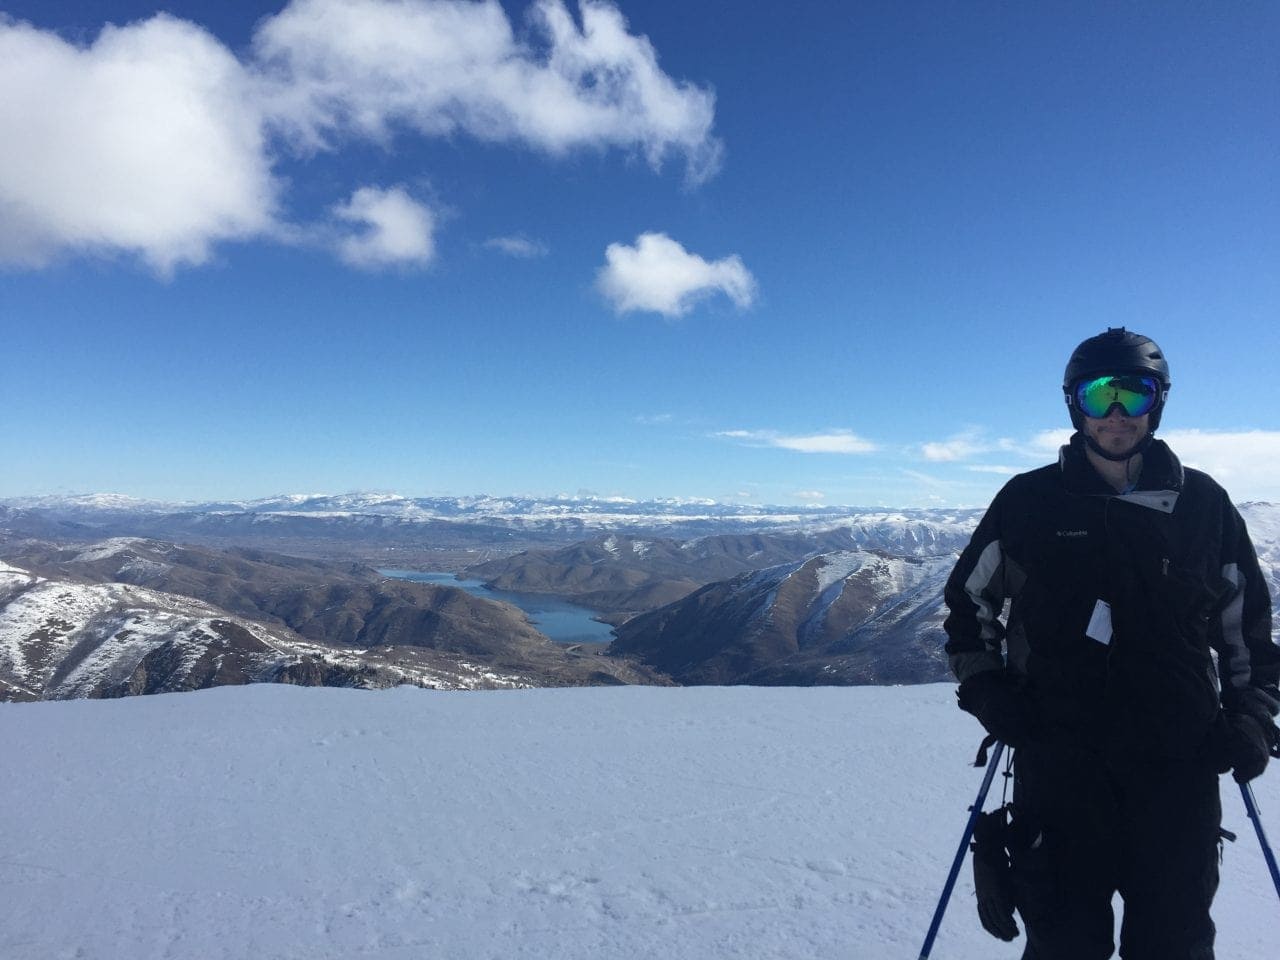 Keith standing on top of Sundance Ski Resort